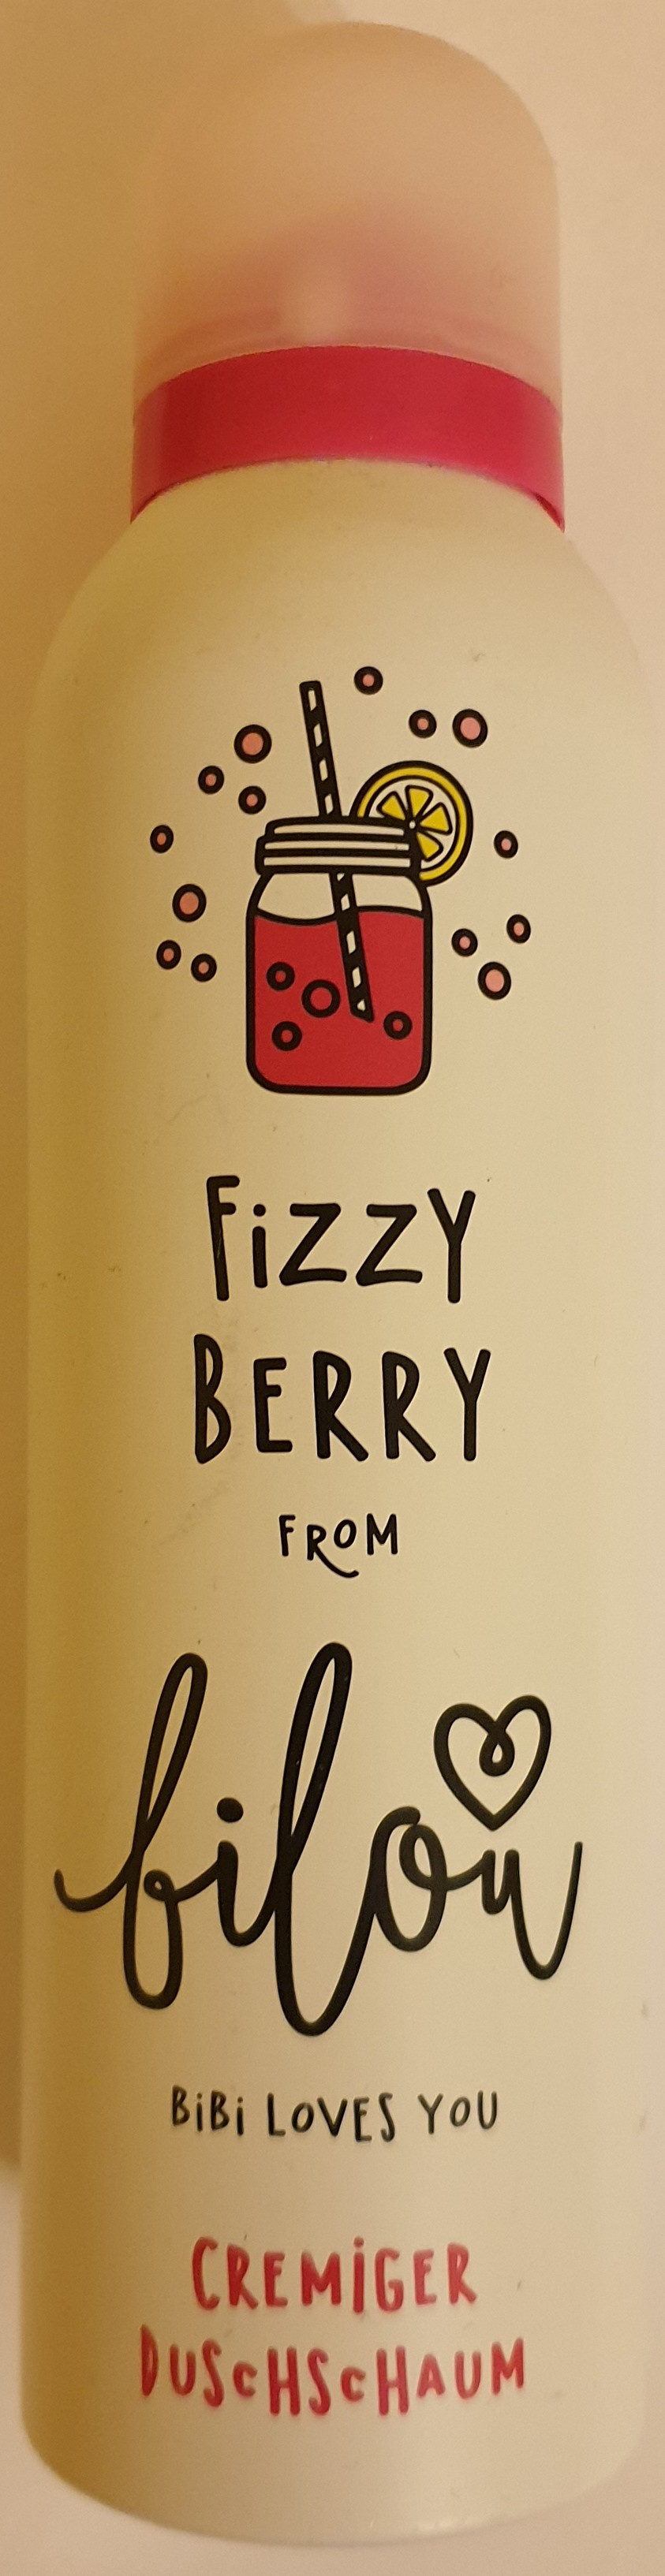 Fizzy berry - Product - de